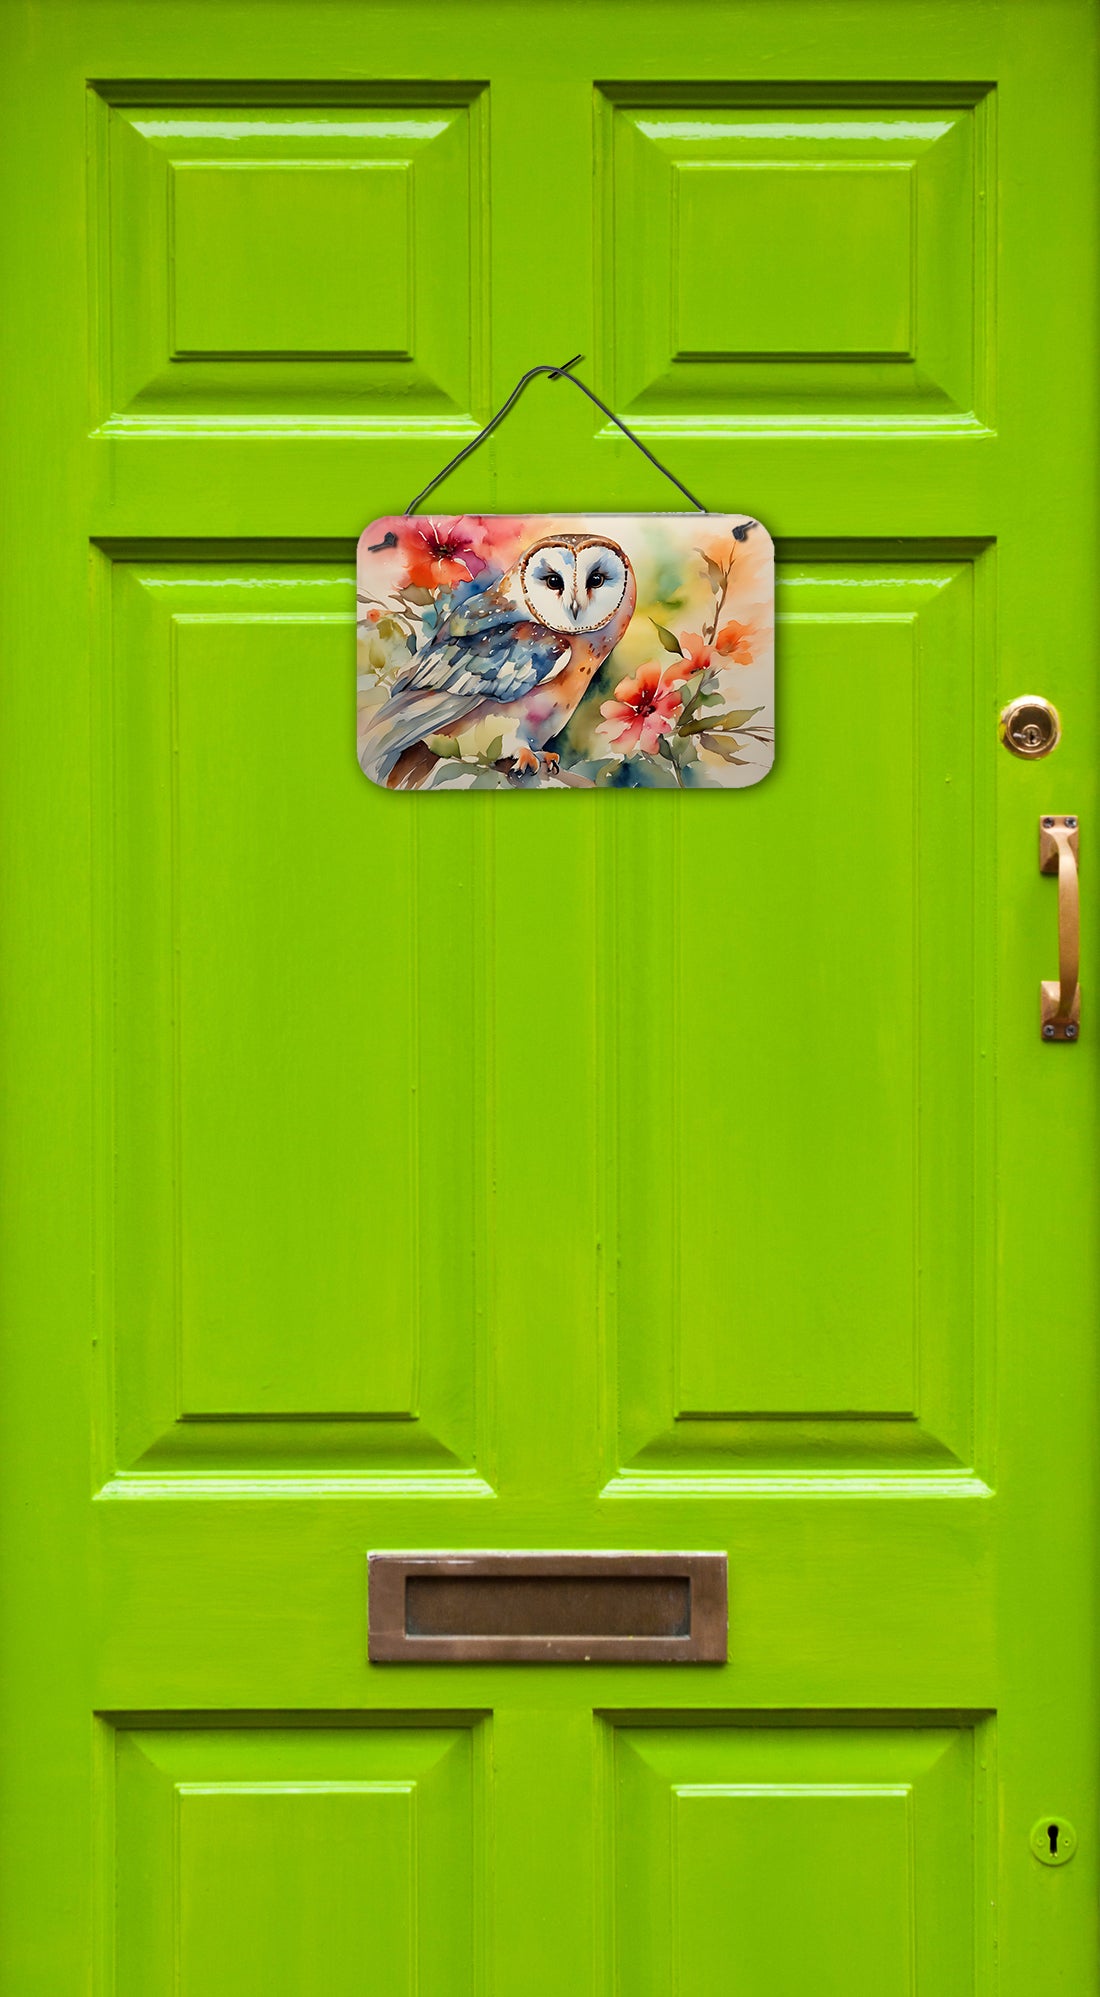 Buy this Barn Owl Wall or Door Hanging Prints